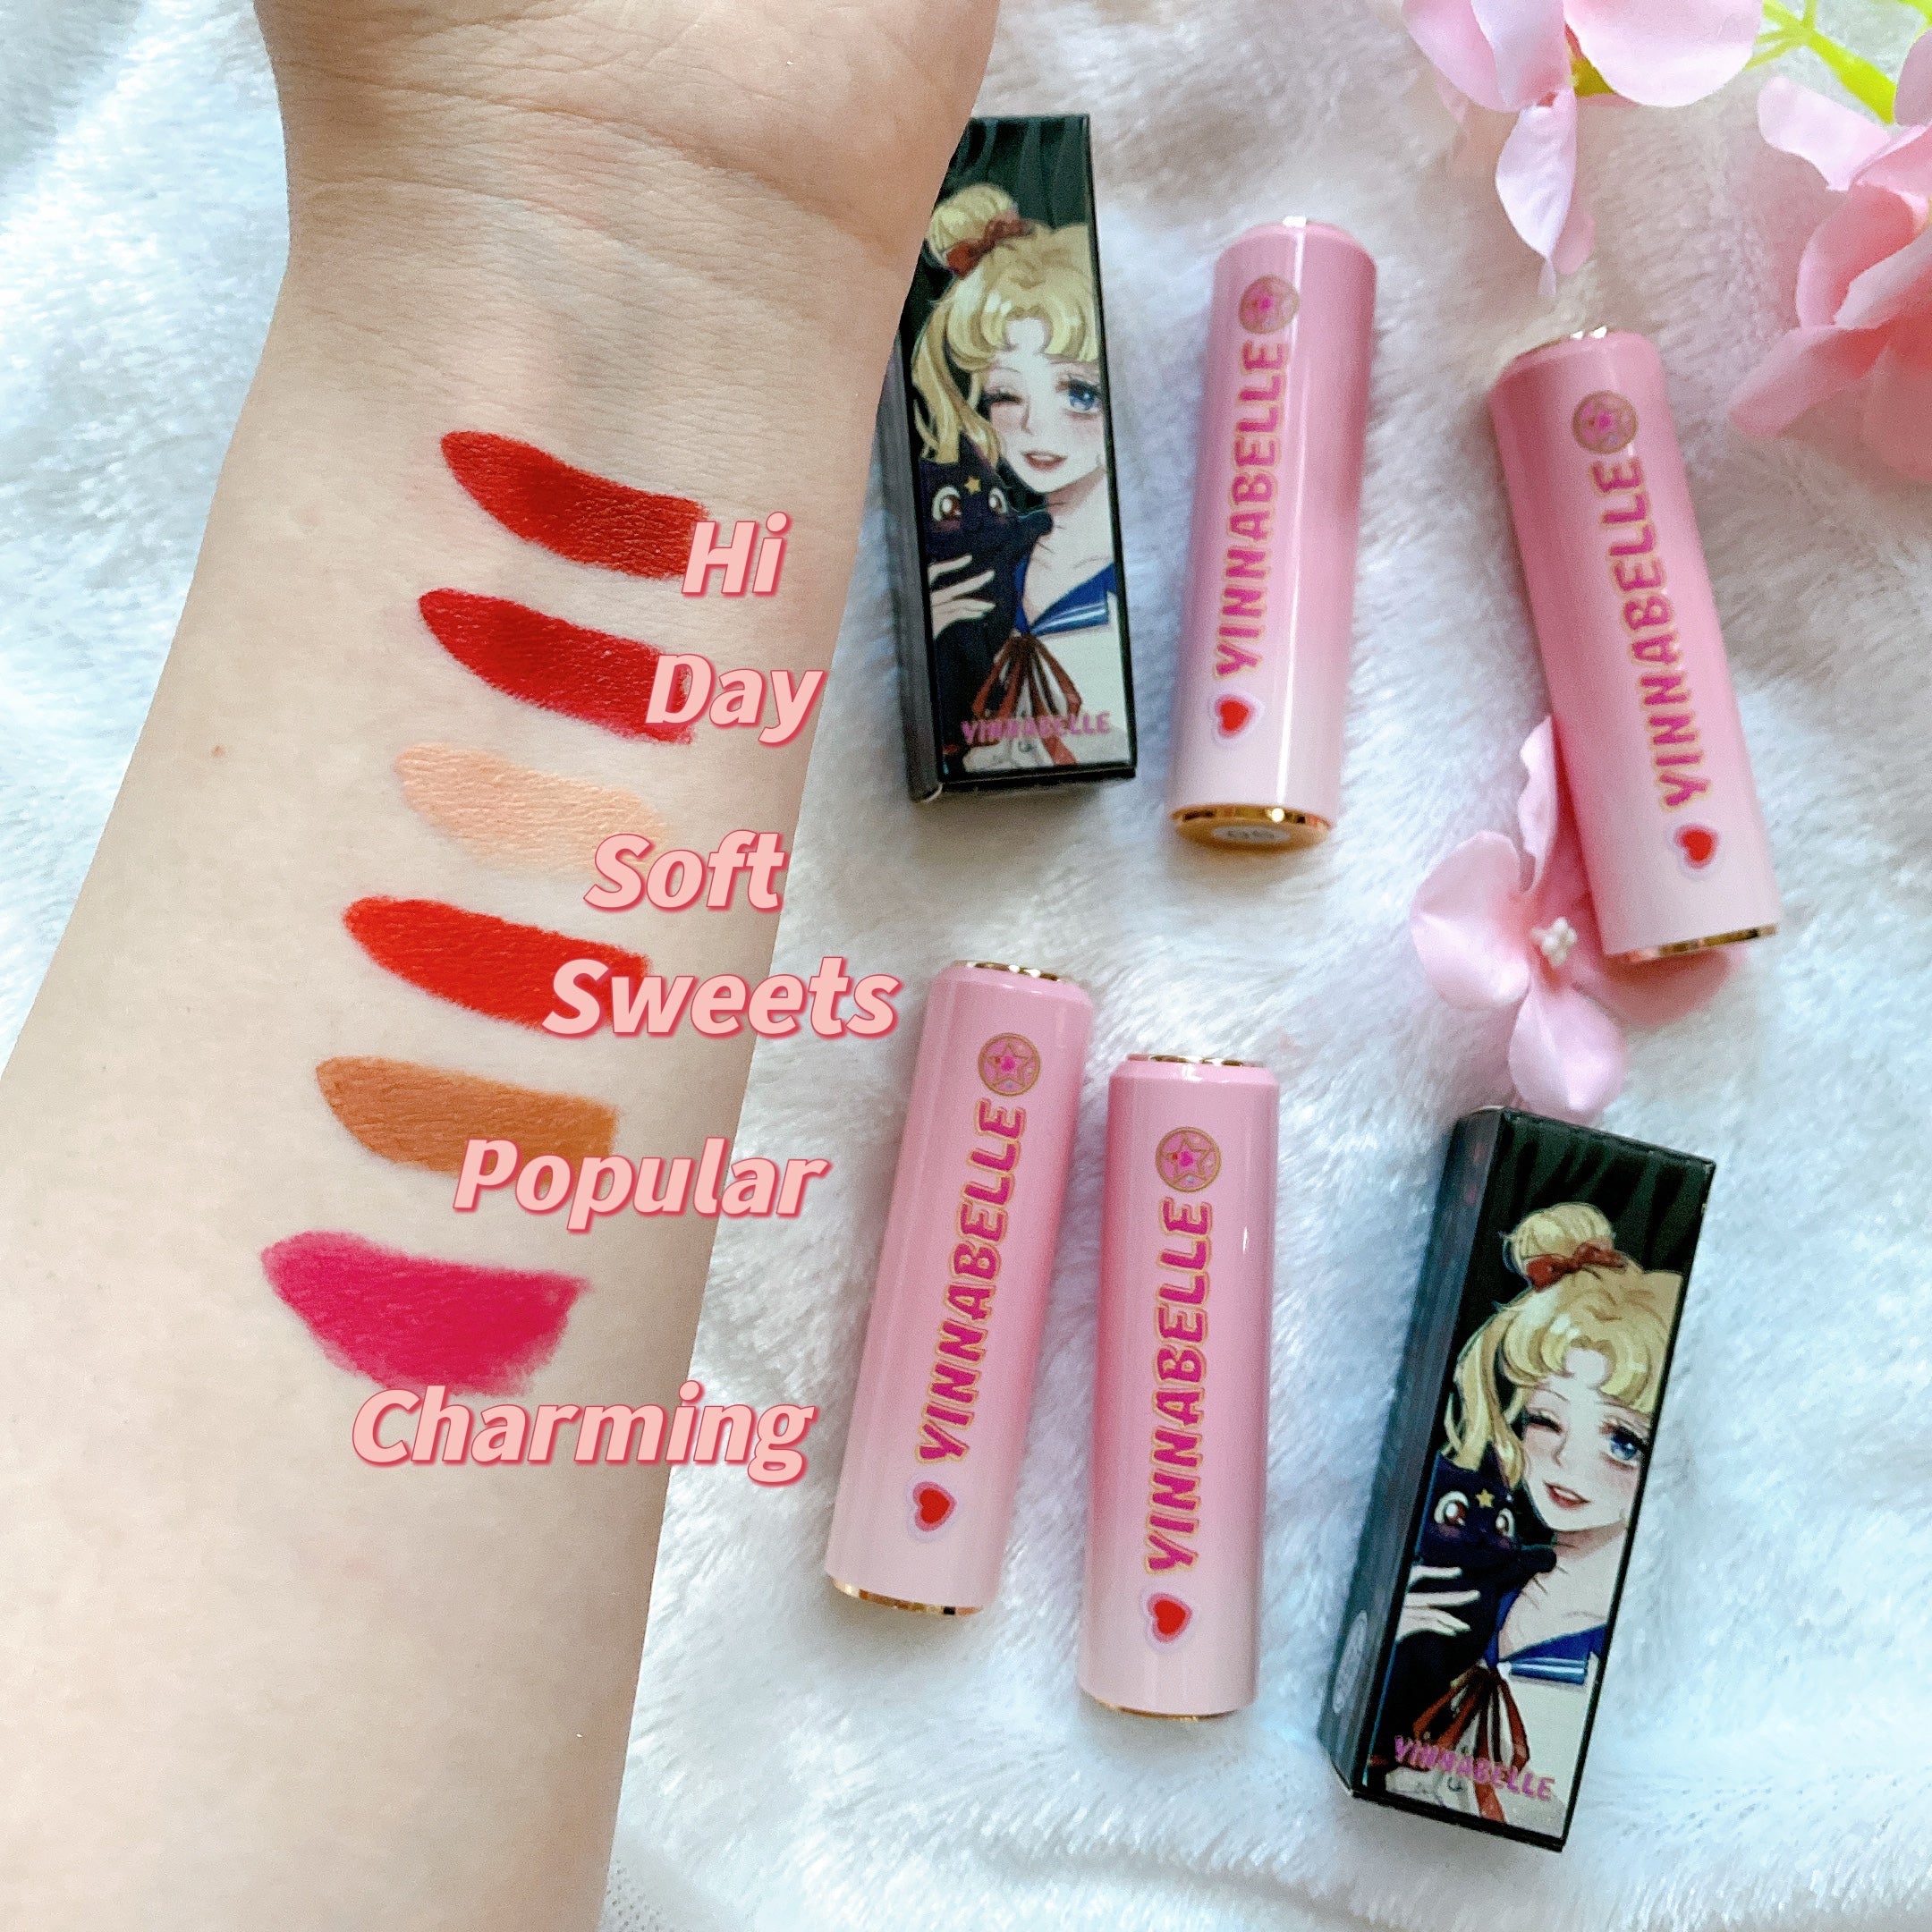 anime lipstick - Google Search